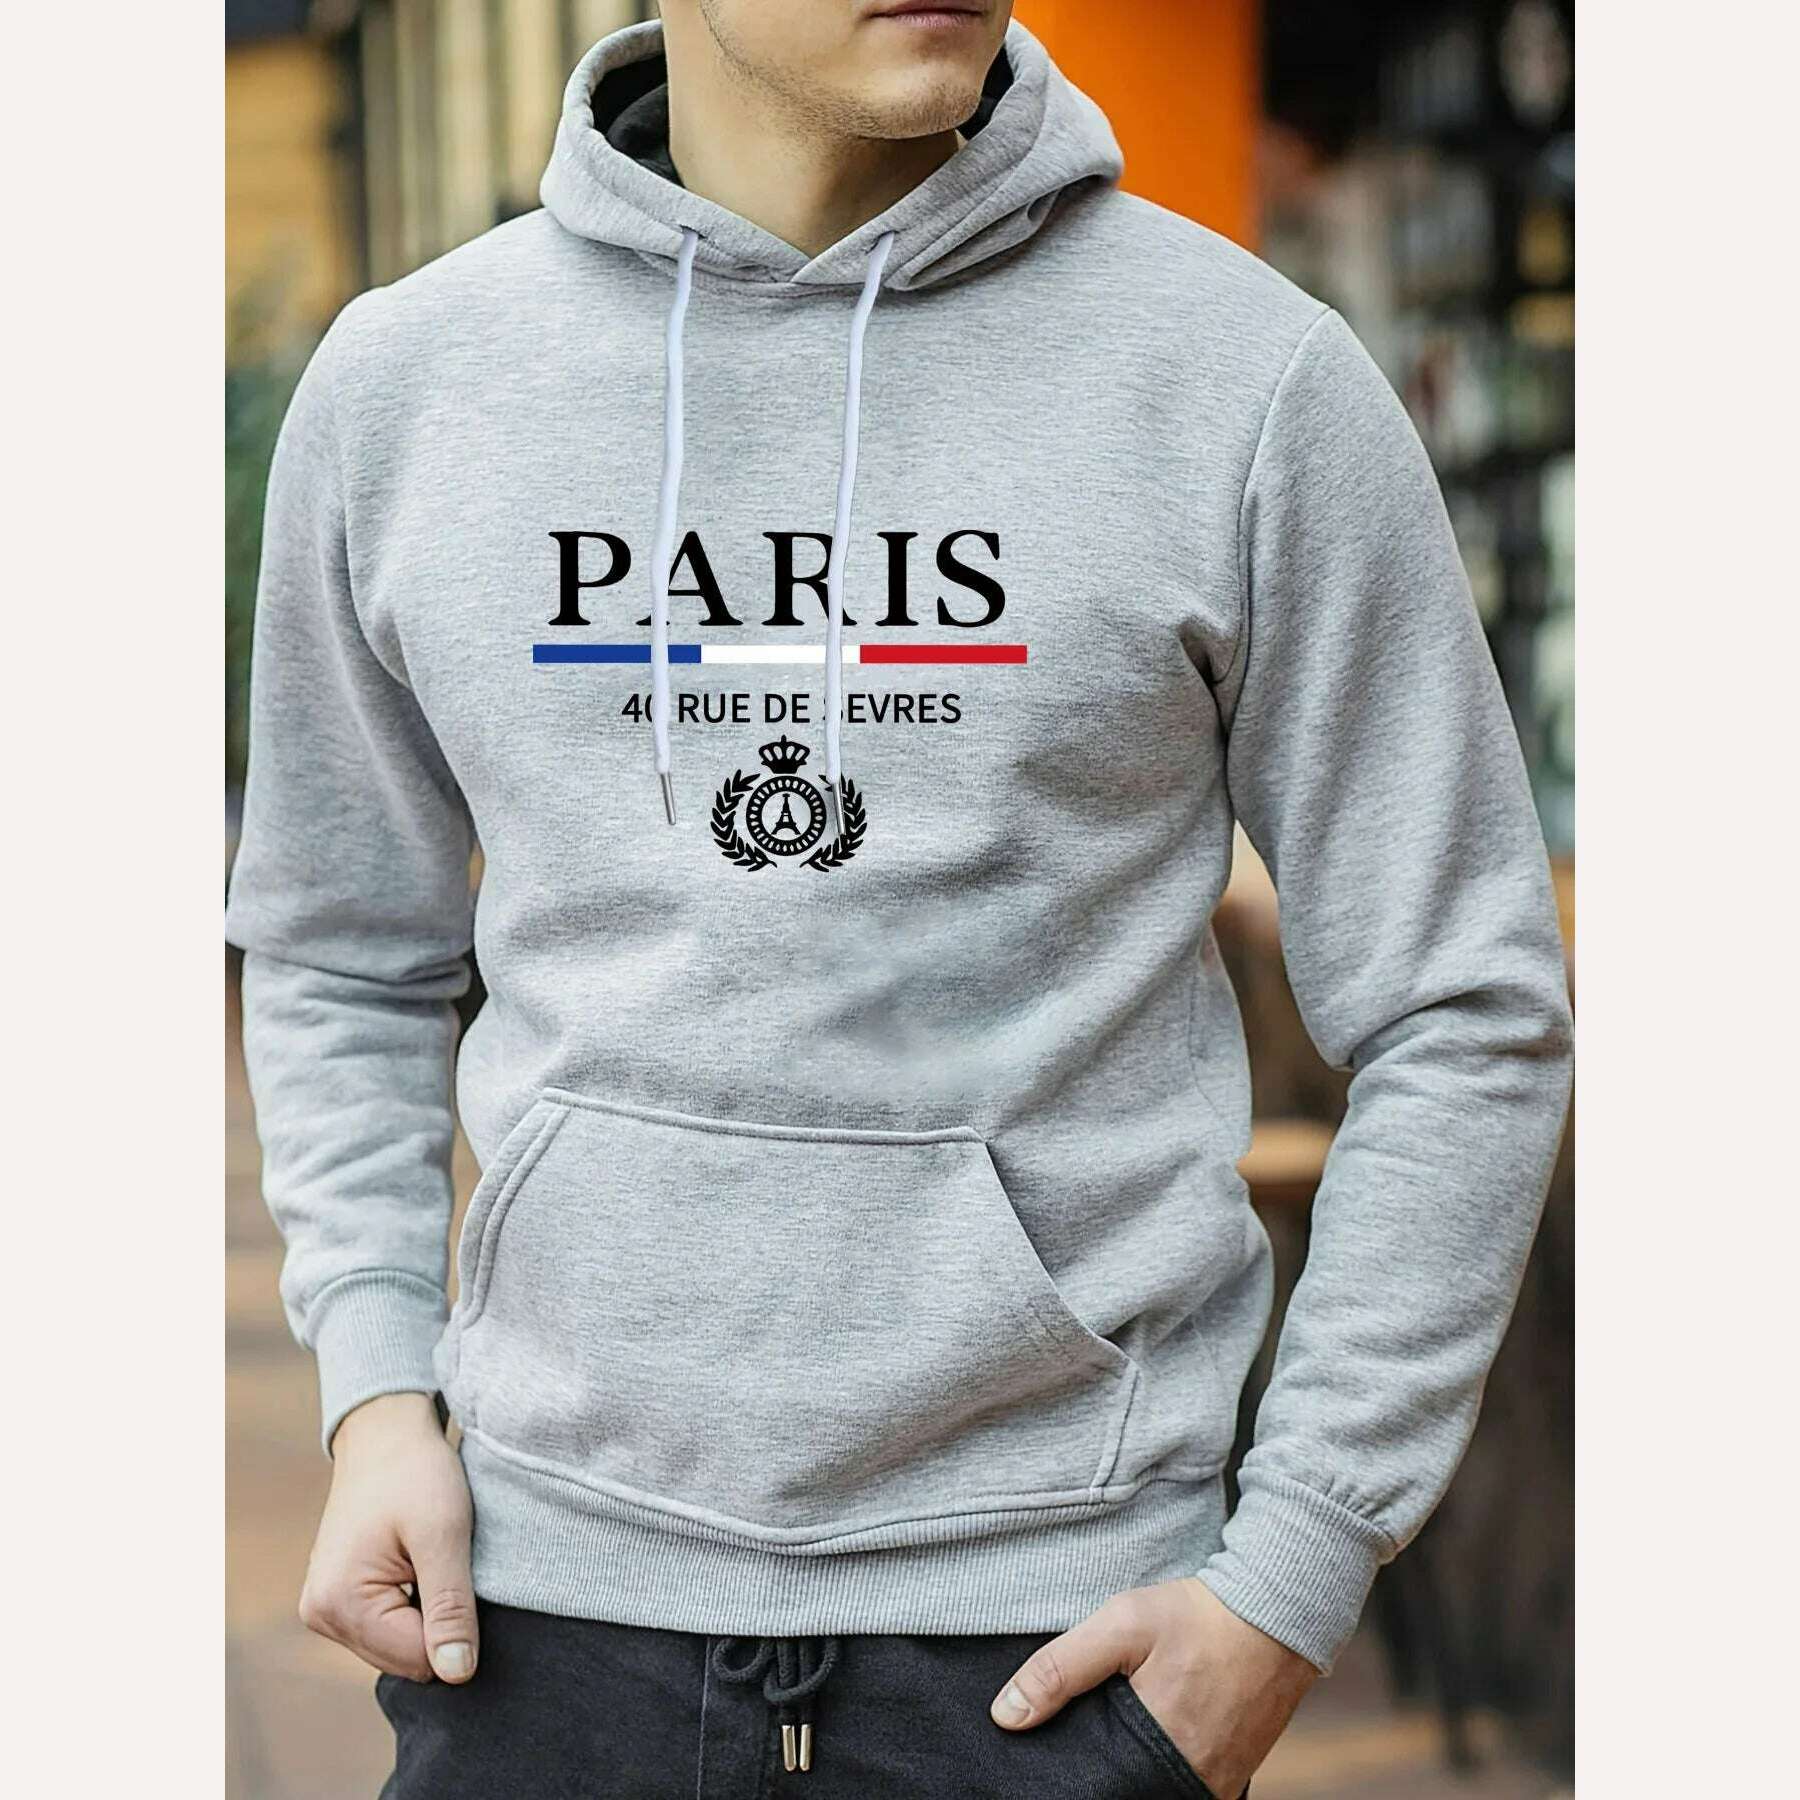 KIMLUD, Men's Autumn Winter Hooded Fashion Sweater Tshirt Tops, A-PARIS-hui / M, KIMLUD Womens Clothes